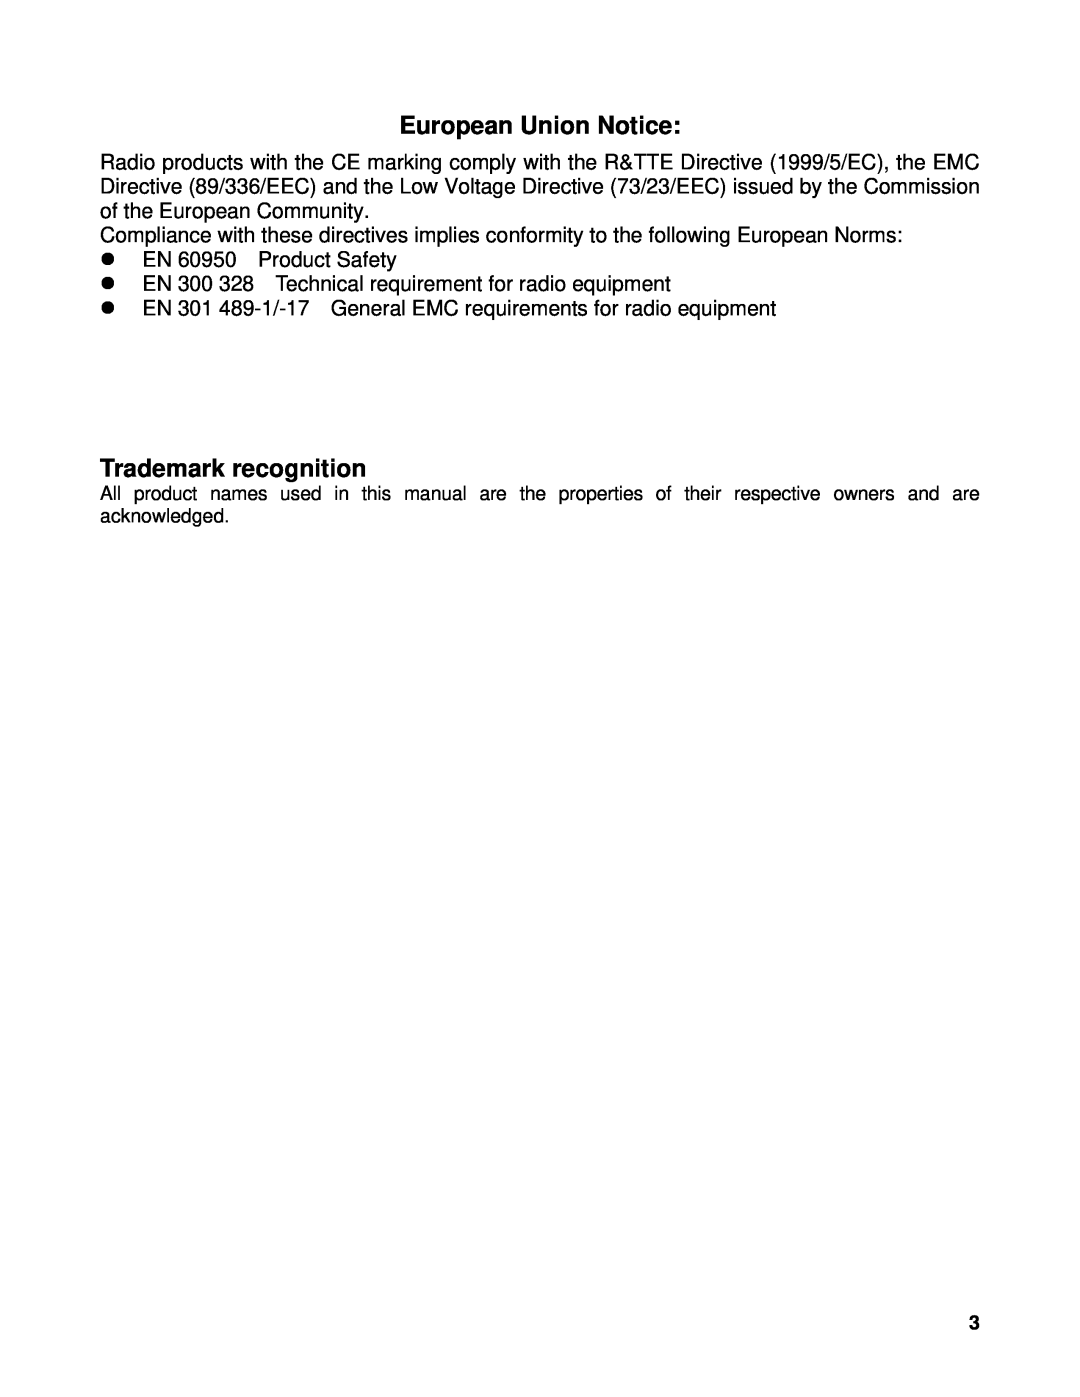 TRENDnet TEW-637AP manual European Union Notice, Trademark recognition 